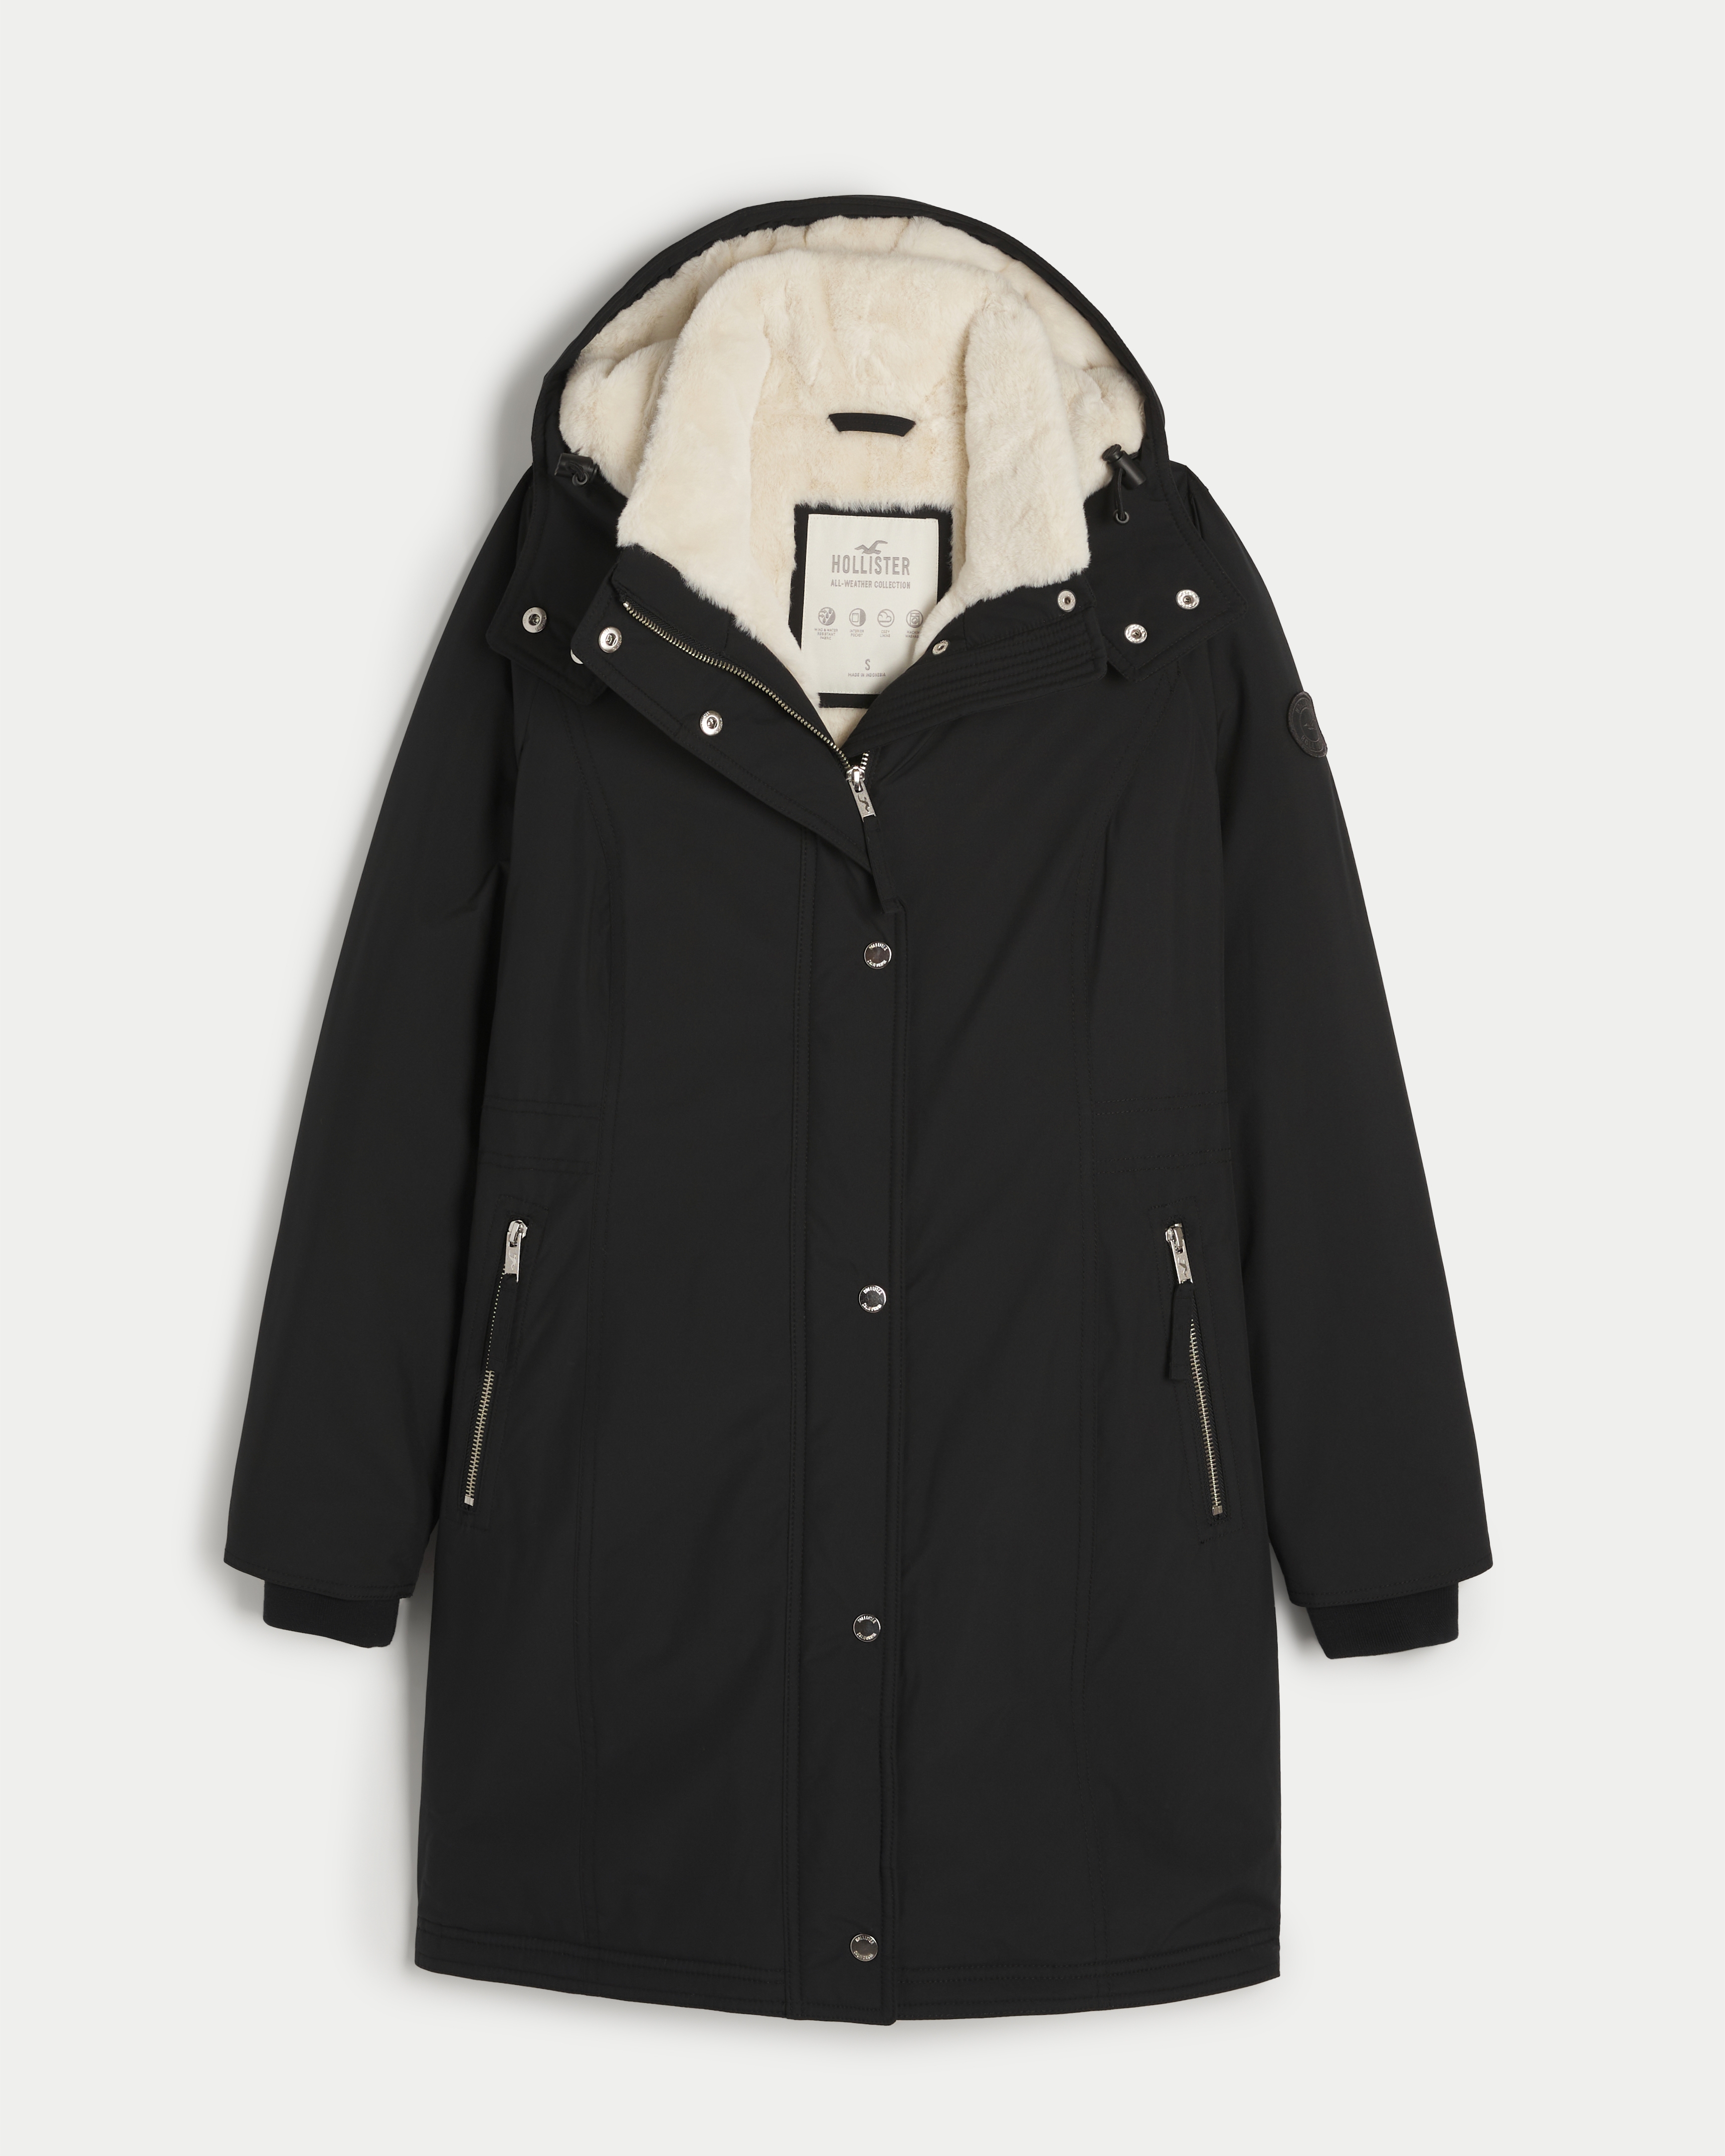 Jackets & Coats  Hollister Co. Mens Faux Fur-Lined All-Weather Parka Black  · AmrWadeaArt